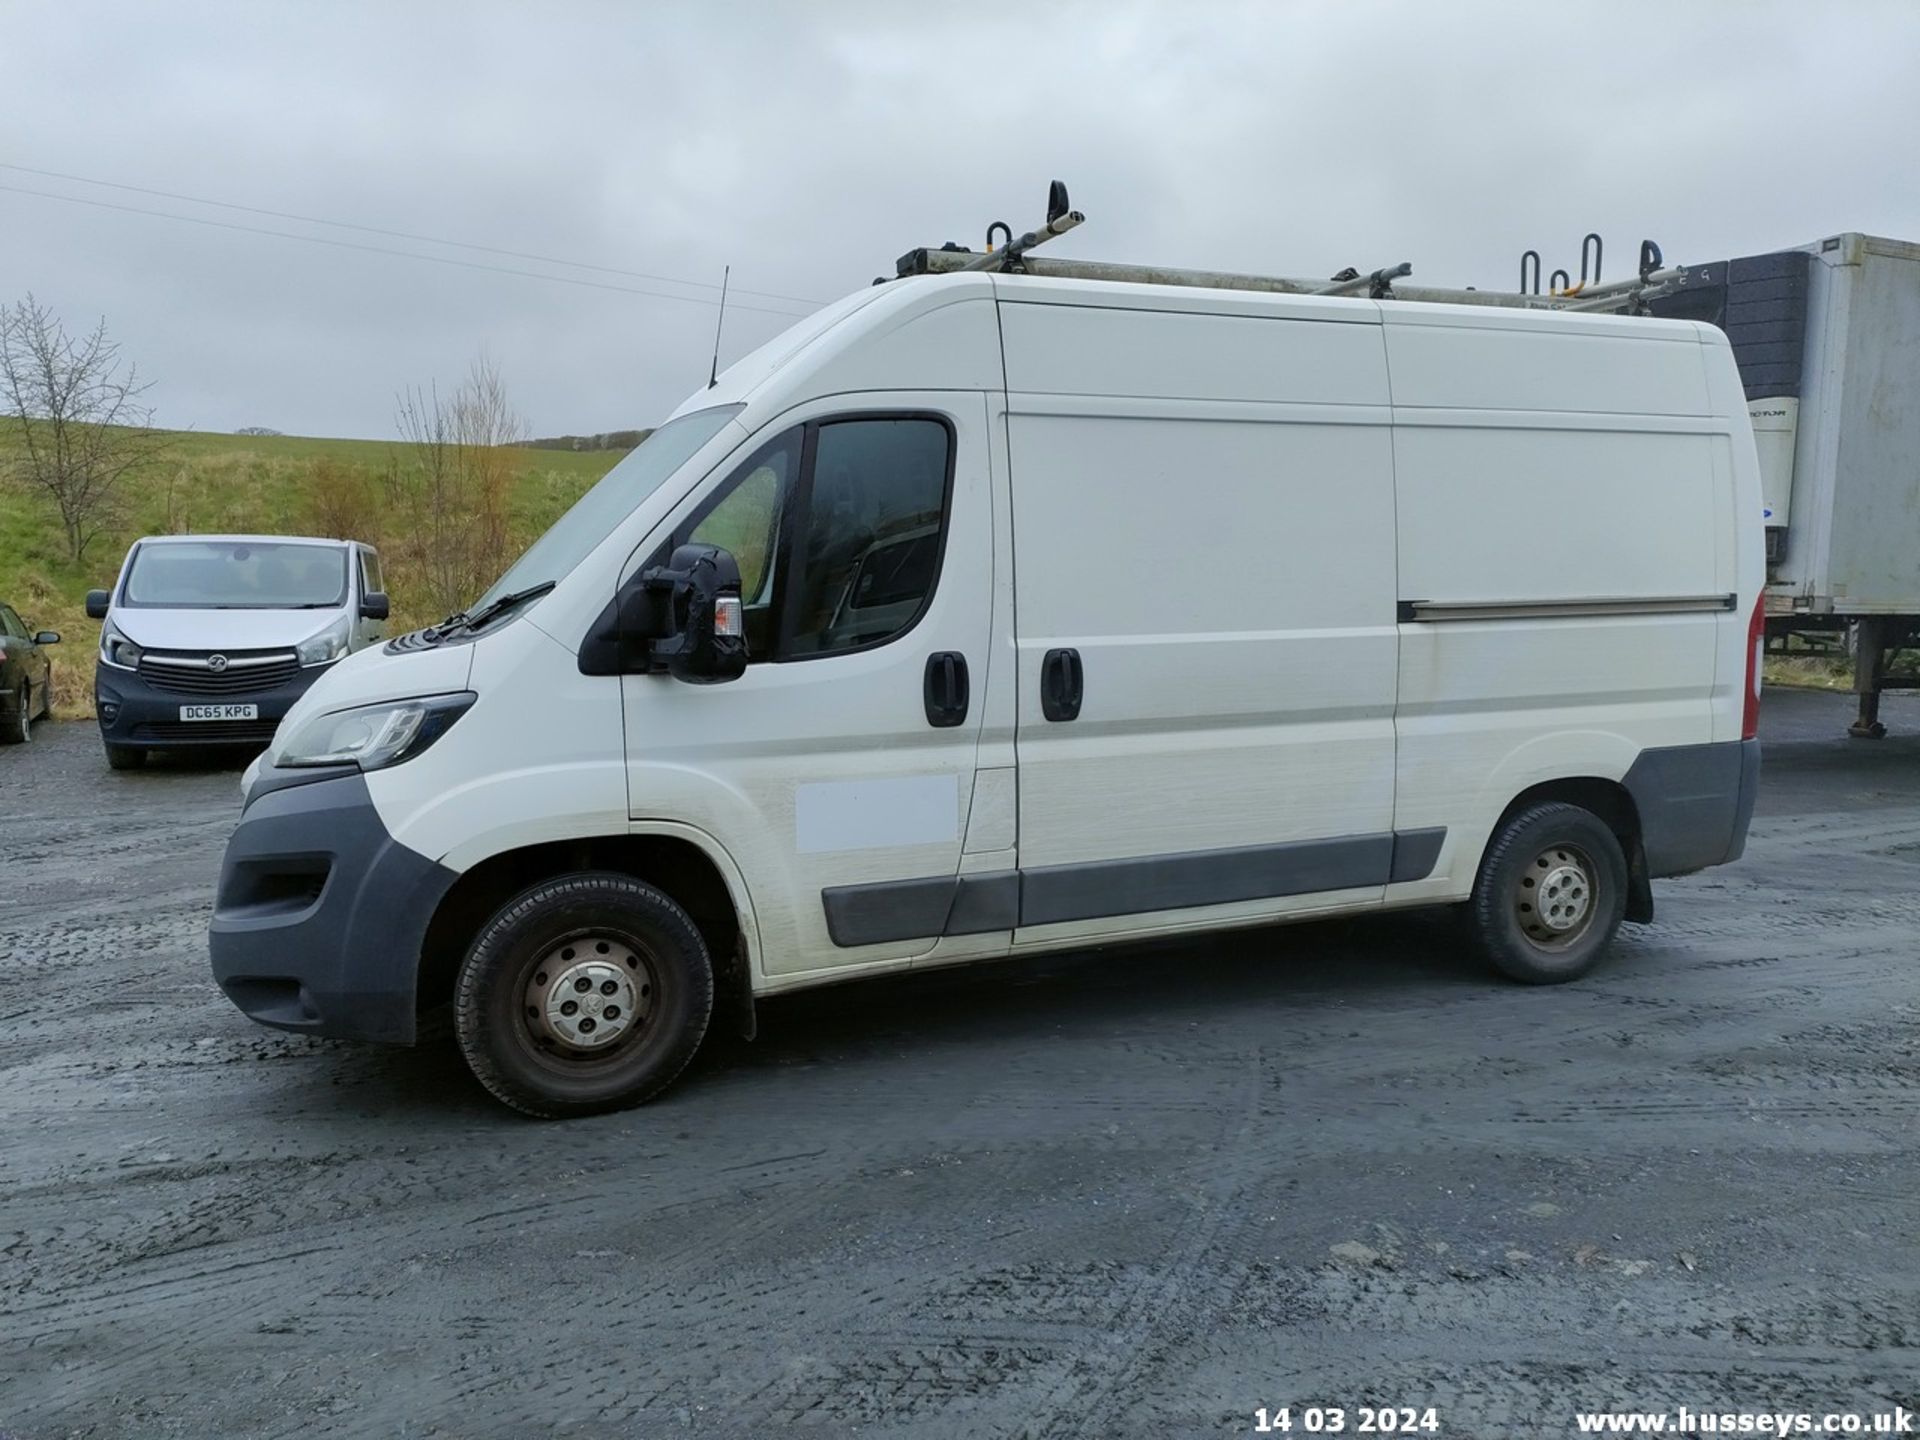 16/16 PEUGEOT BOXER 335 L2H2 HDI - 2198cc 5dr Van (White, 131k) - Image 19 of 62